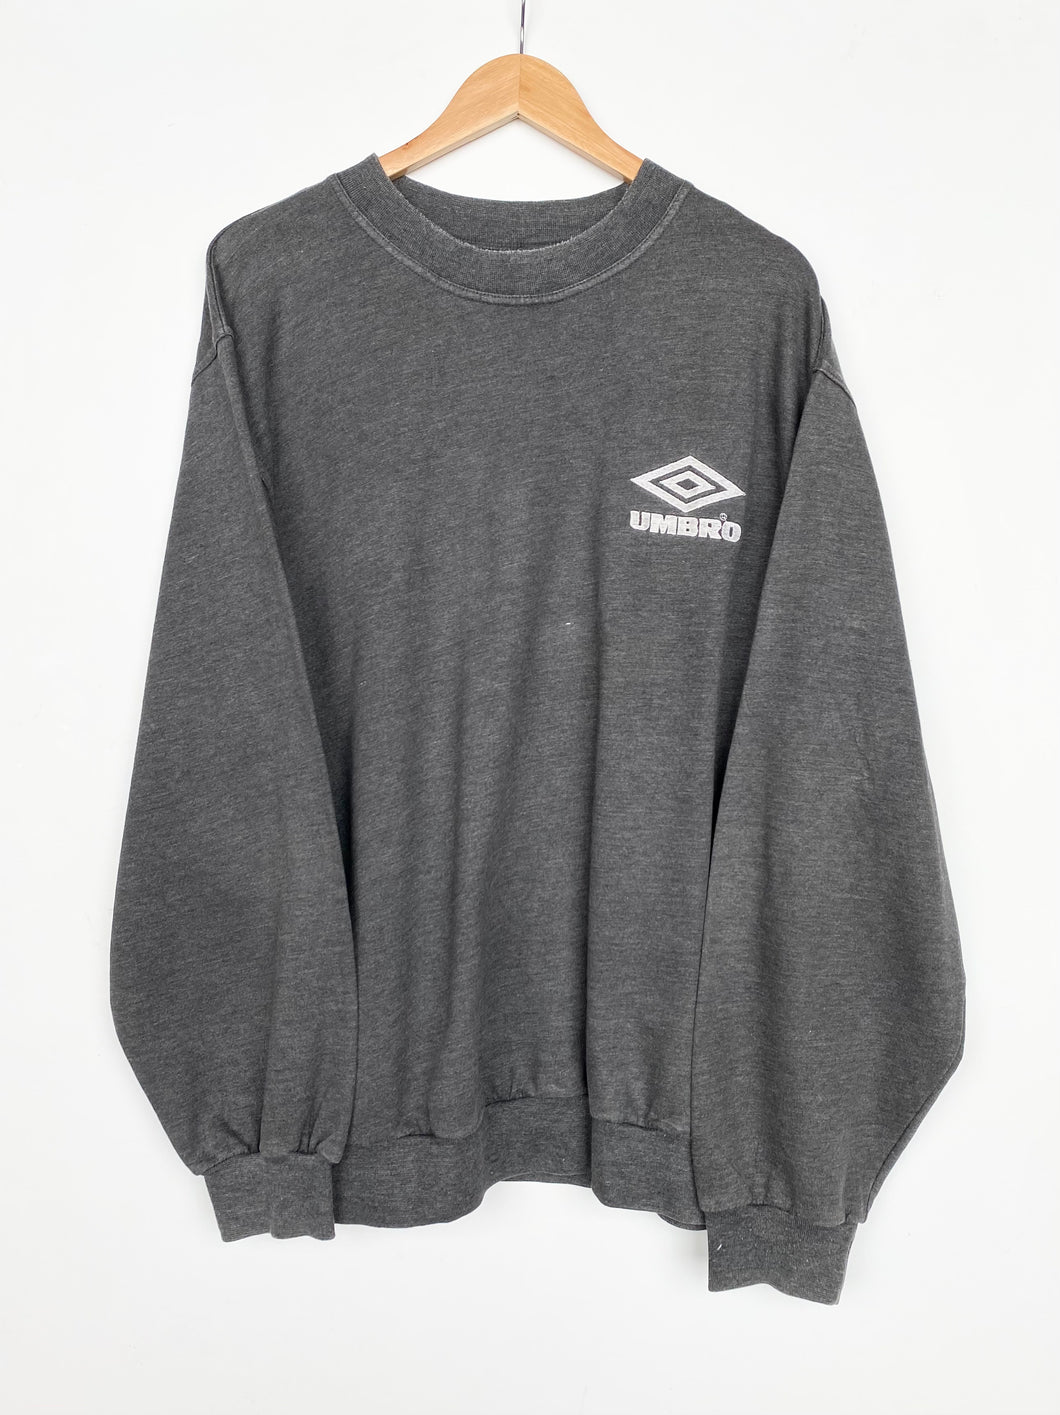 90s Umbro sweatshirt (XL)